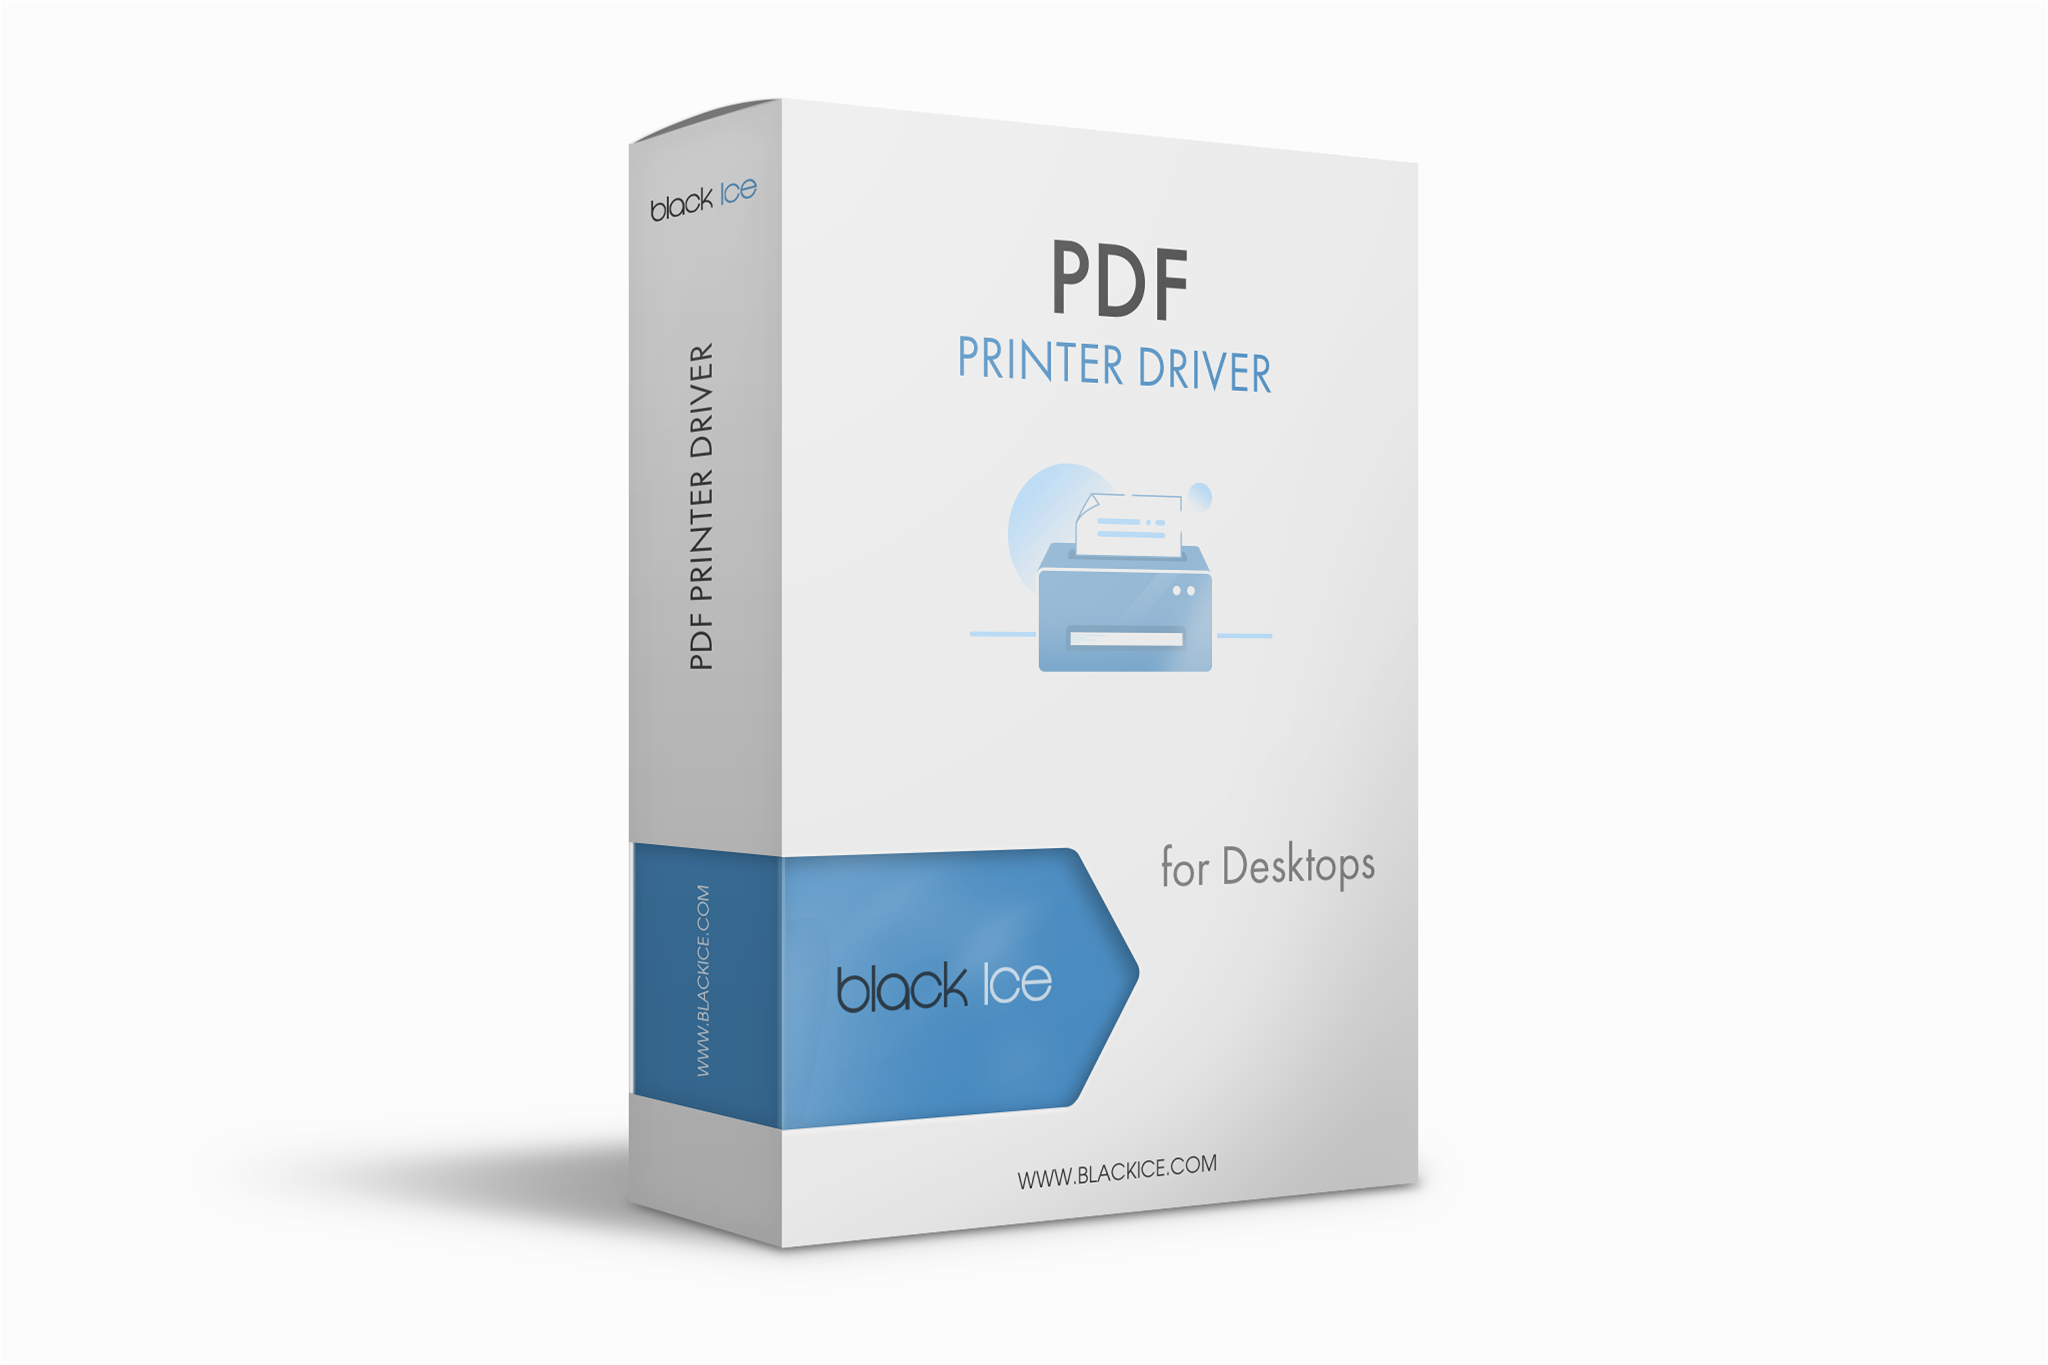 PDF Printer Driver Subscription (Single License and 4 multi-printers or ports)